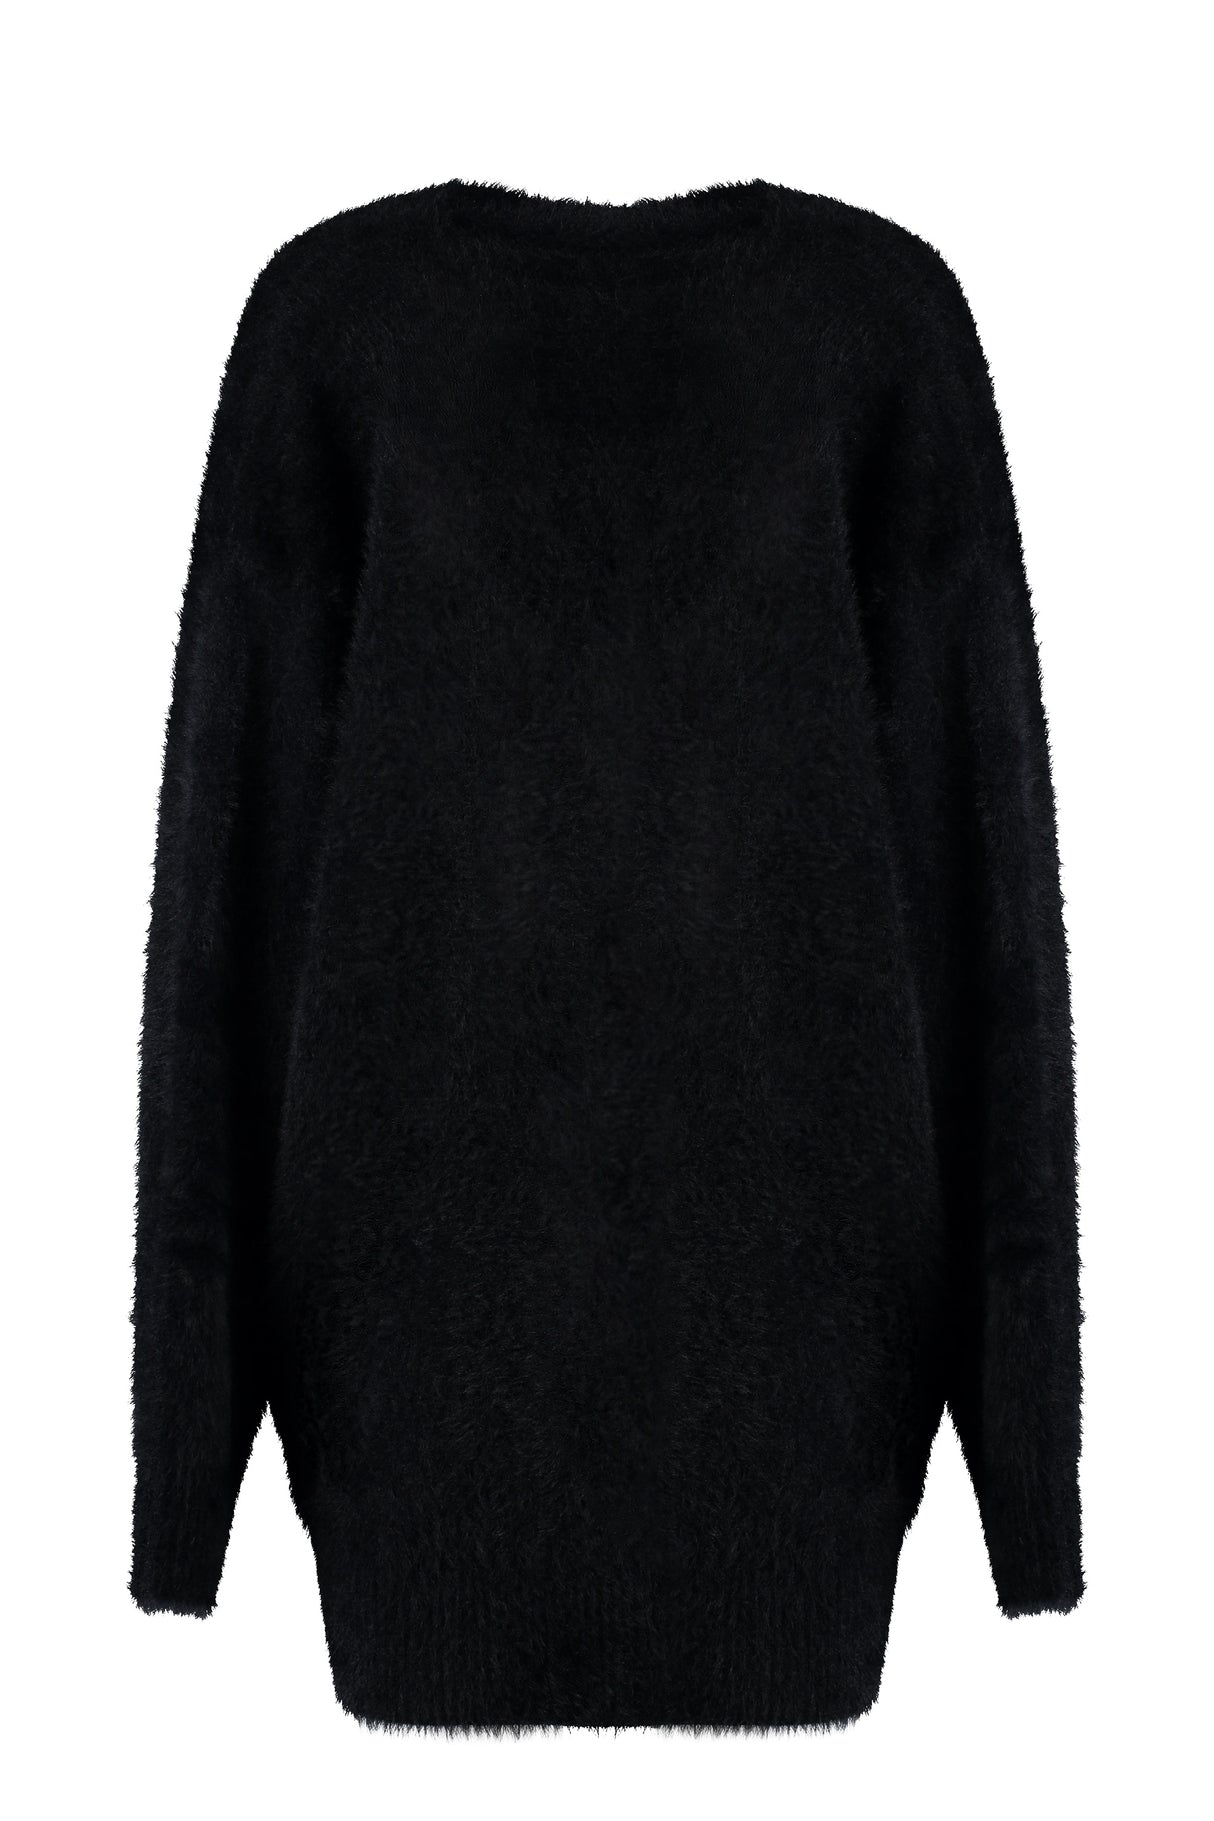 PHILOSOPHY DI LORENZO SERAFINI Black Embellished Button Maxi-Cardigan - Oversized Knitwear for Women - FW23